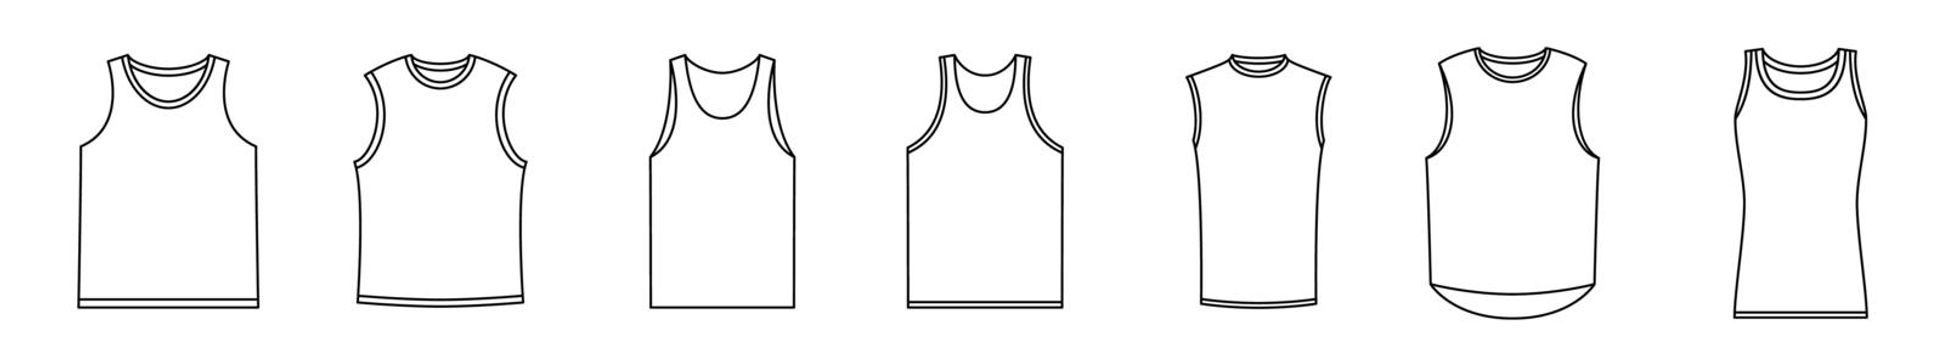 Sleeveless tank icon. Vector illustration. Black linear sleeveless shirts.